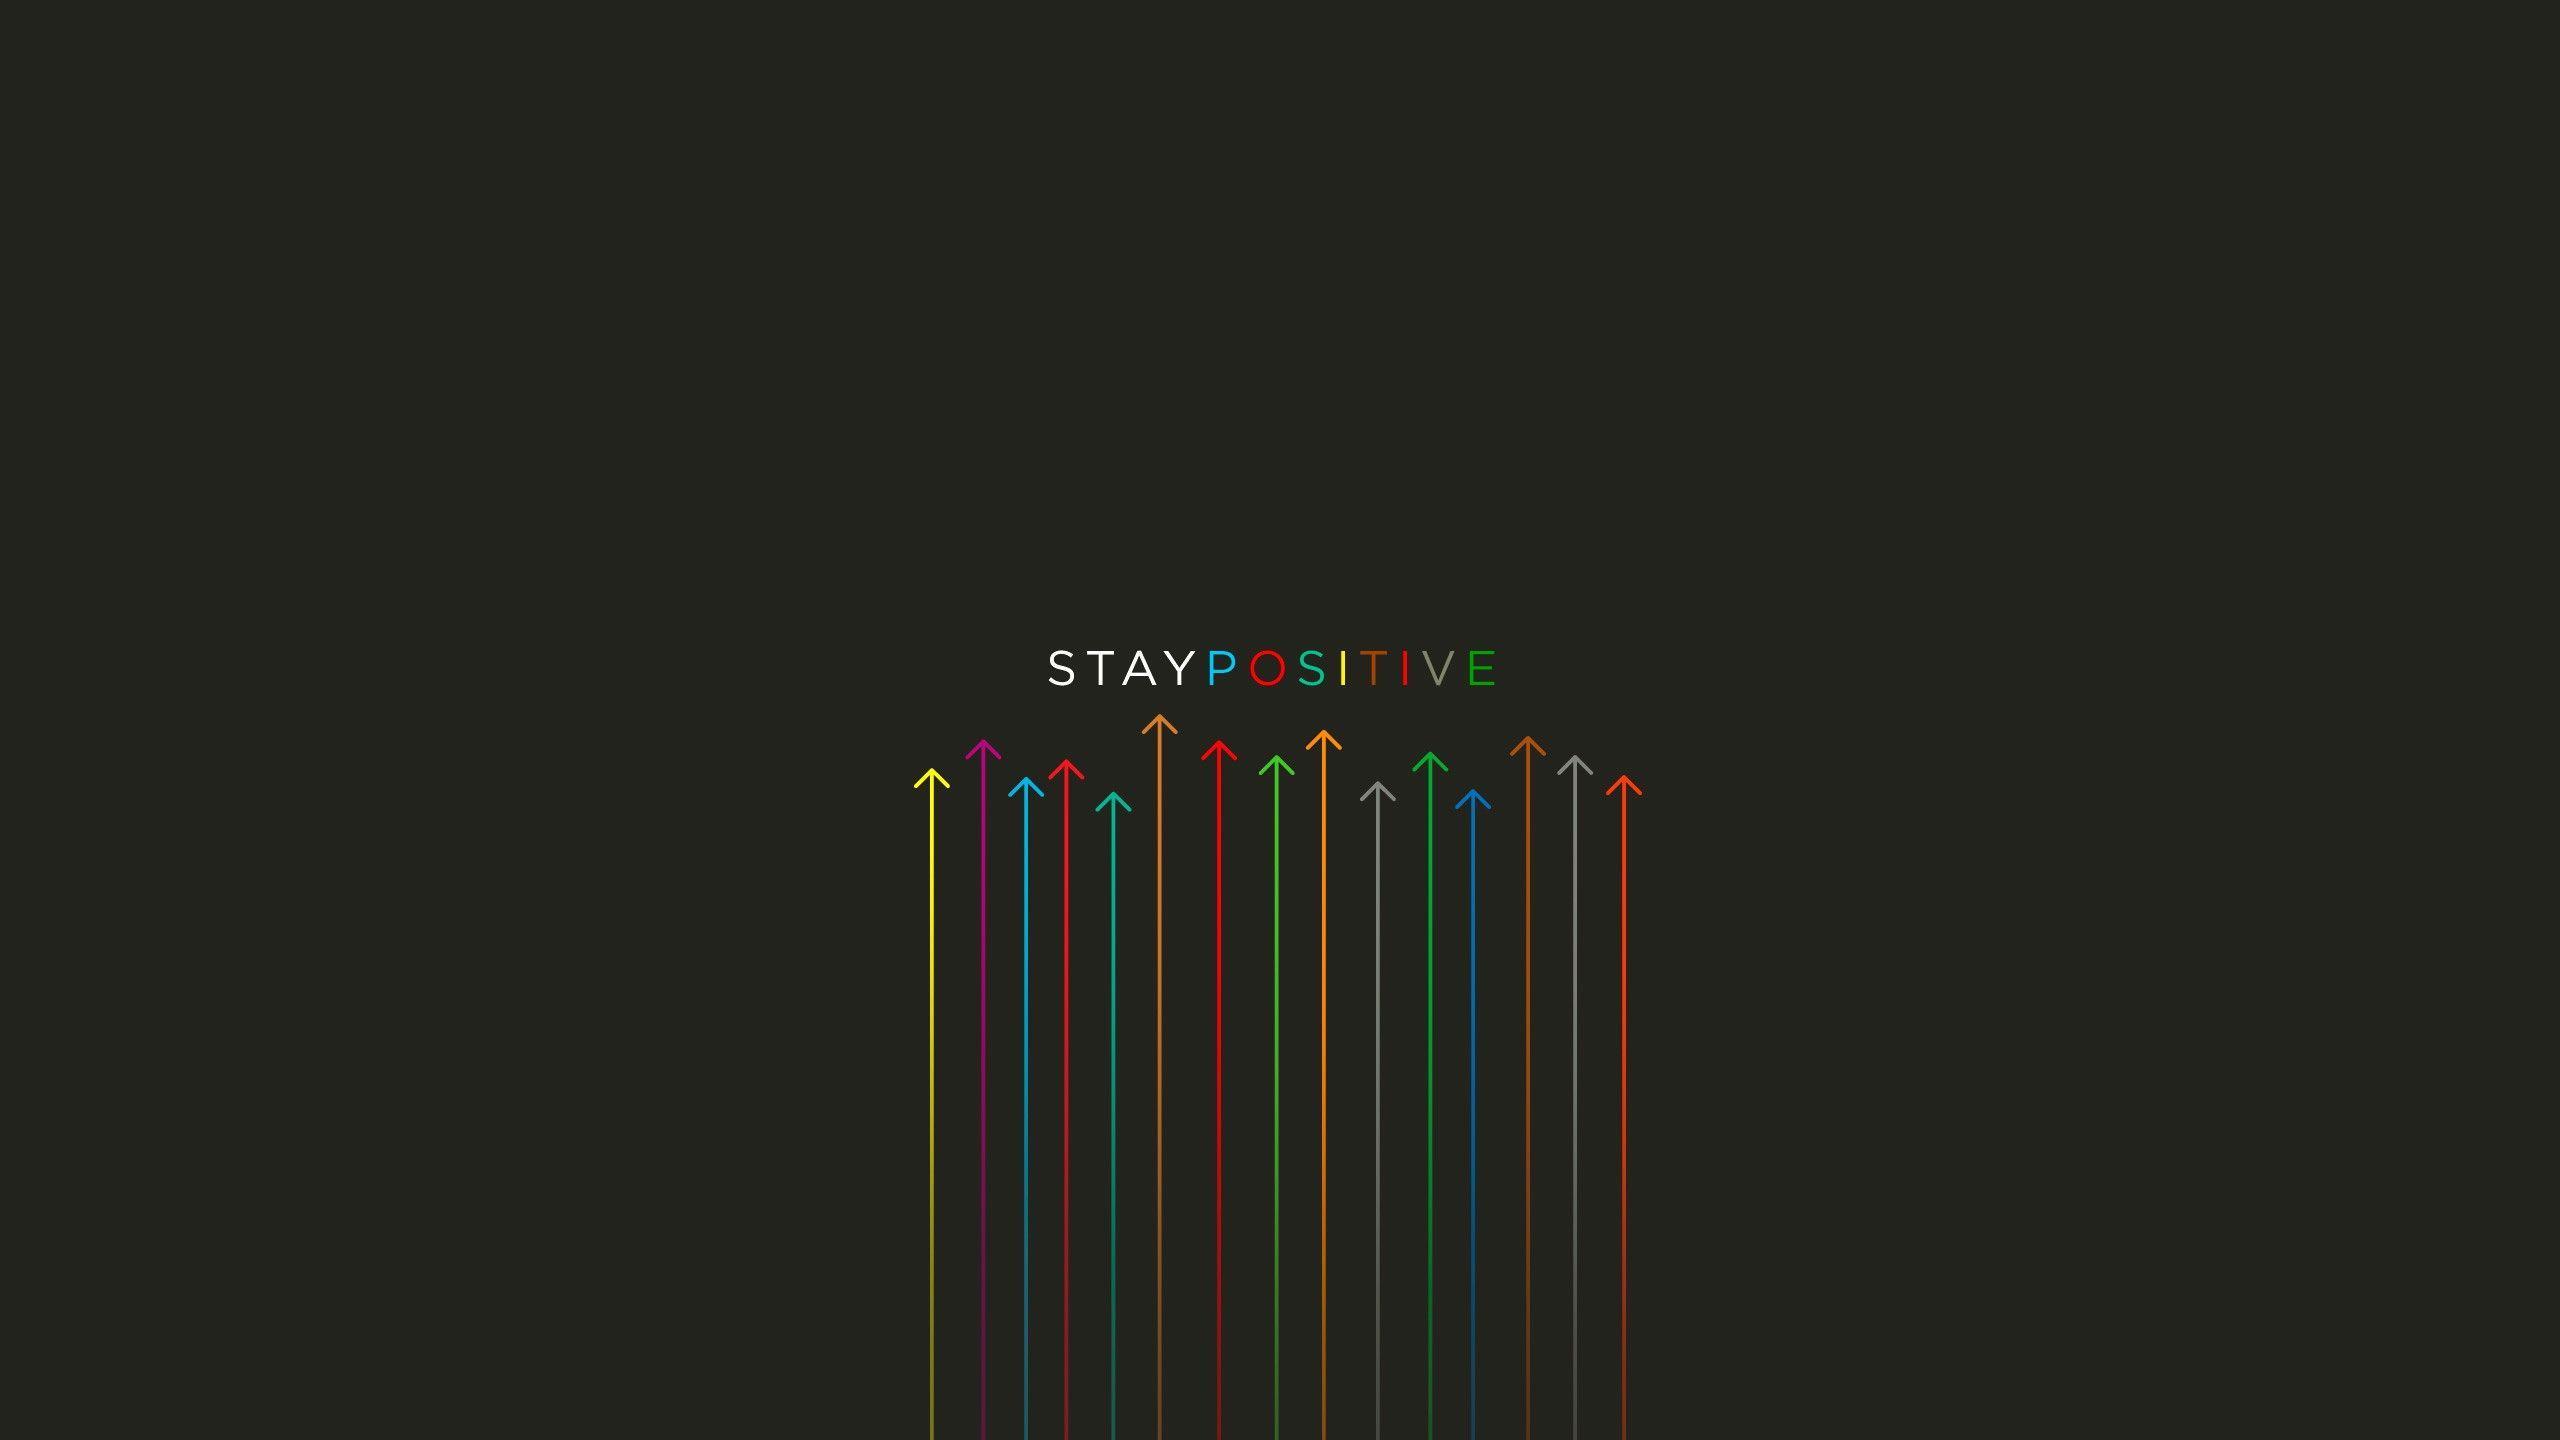 50+] Positive Attitude Wallpapers - WallpaperSafari